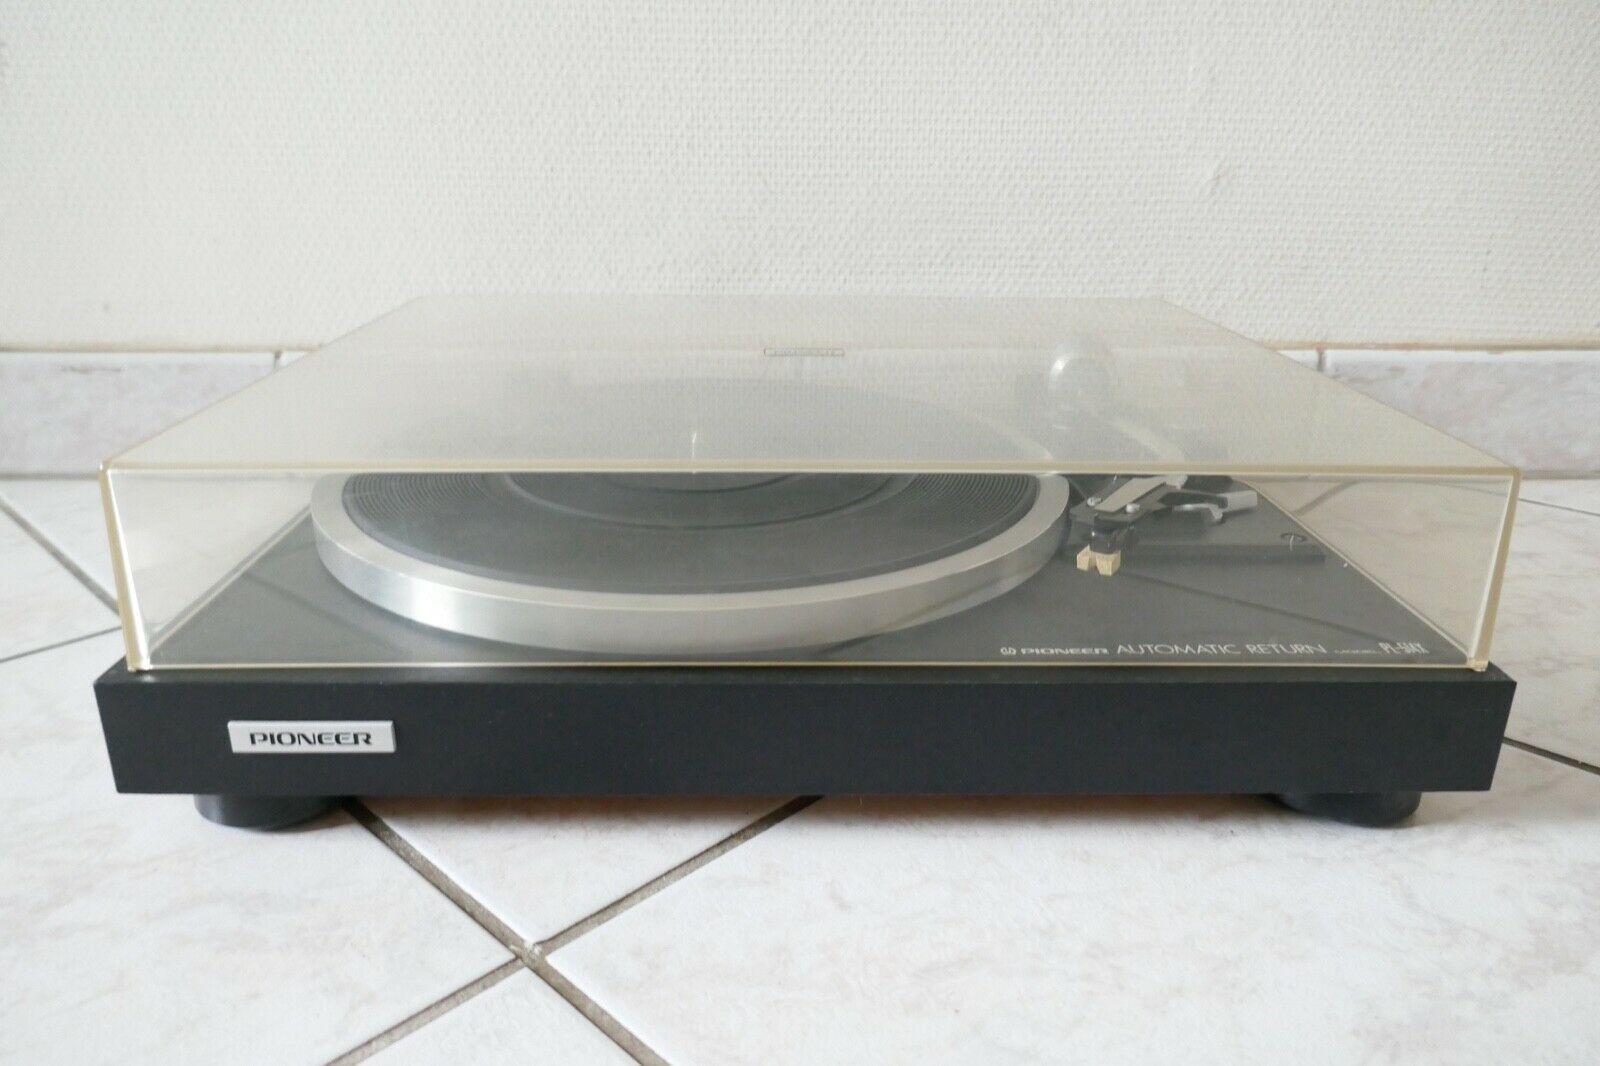 platine vinyle turntable pioneer PL-514X occasion vintage